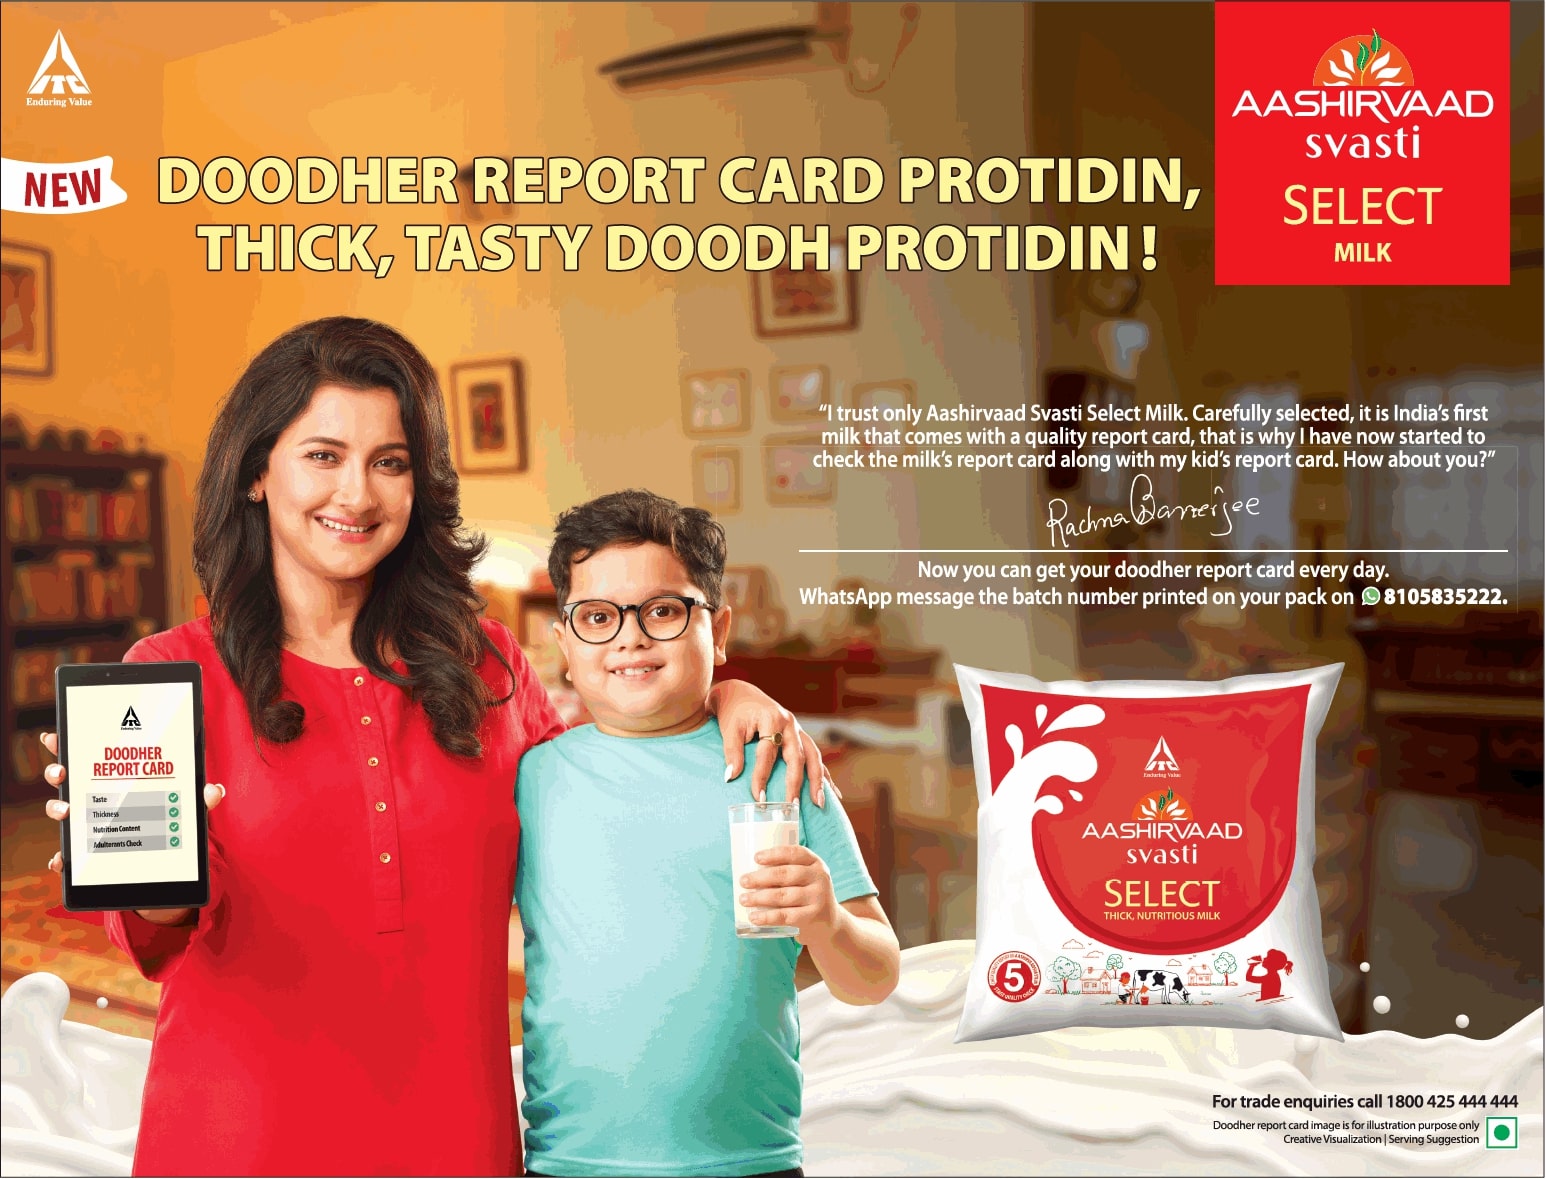 aashirvaad-svasti-select-milk-doodher-report-card-protidin-thick-tasty-doodh-protidin-ad-toi-kolkata-11-11-2020